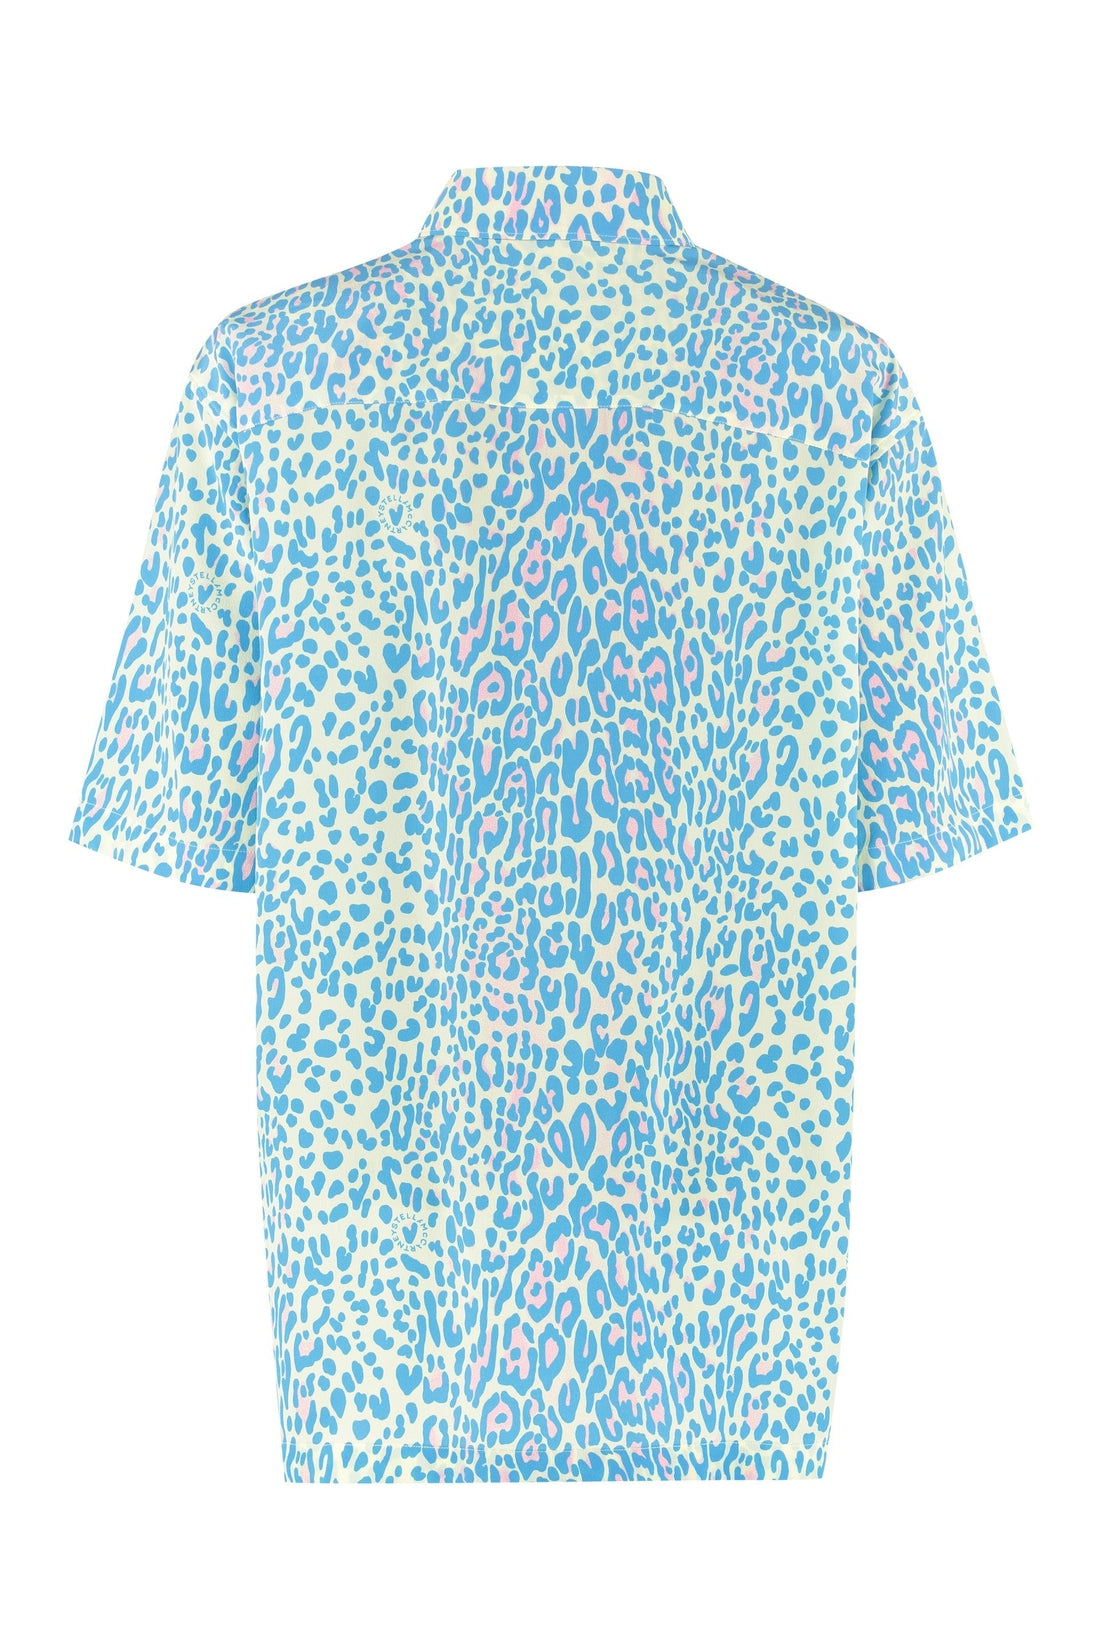 Stella McCartney-OUTLET-SALE-Printed silk shirt-ARCHIVIST